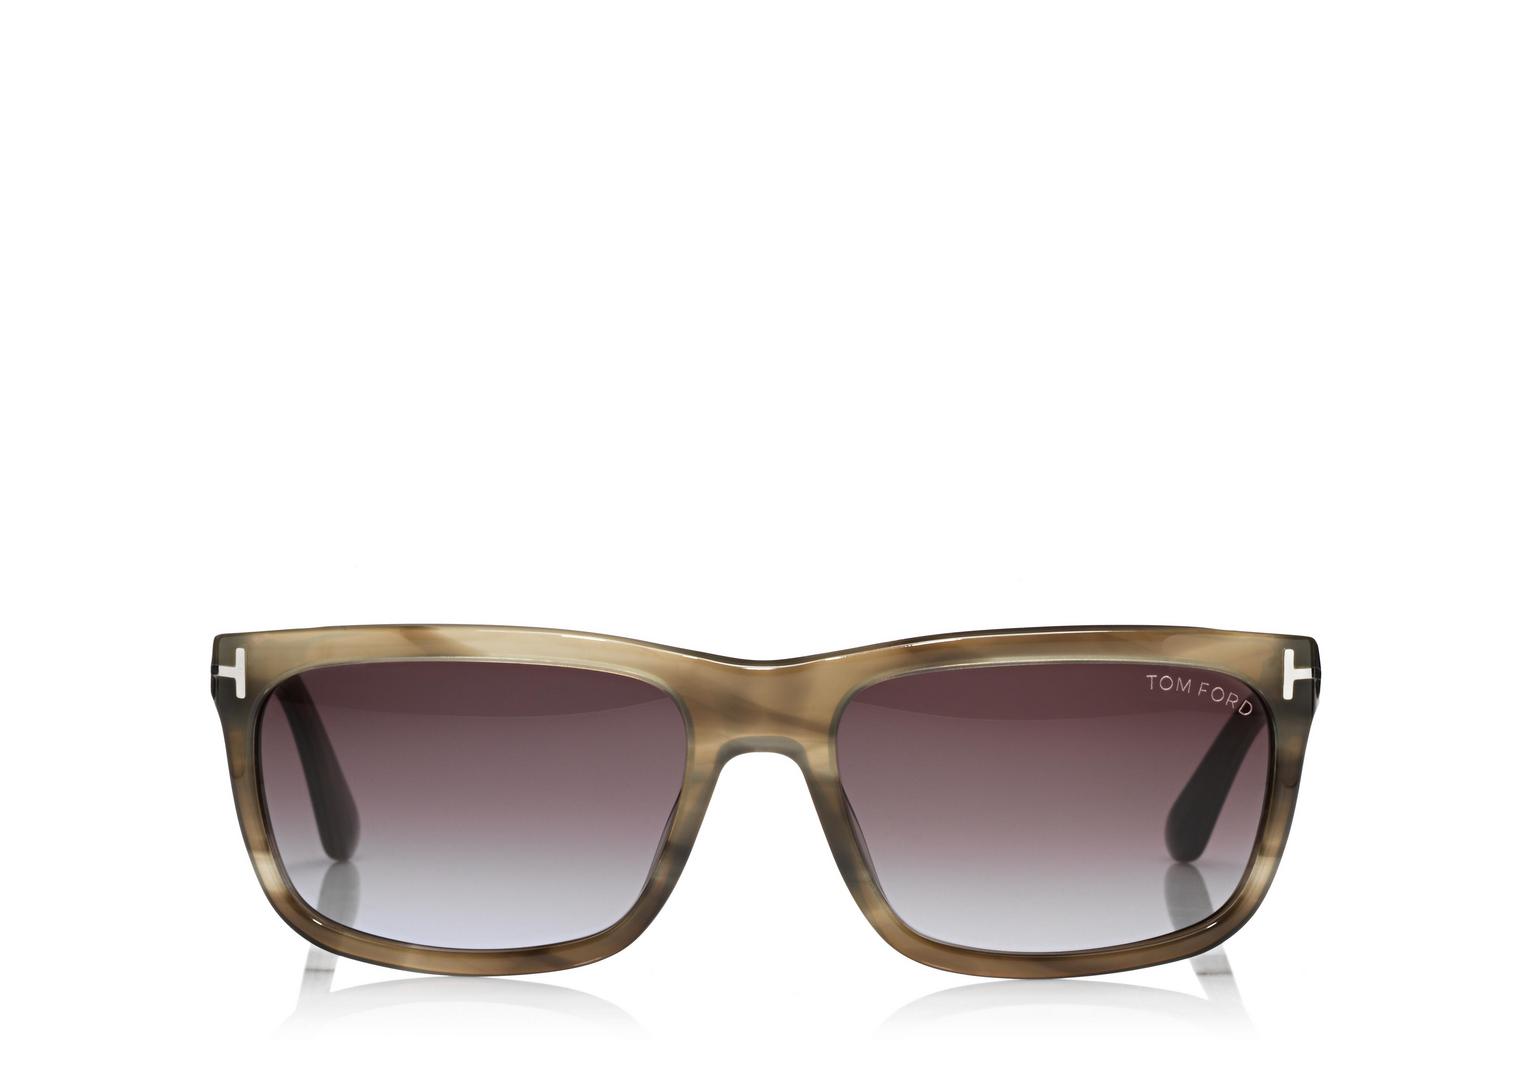 Tom Ford Sunglasses and Eyewear 2016 | Breslow Eye Care